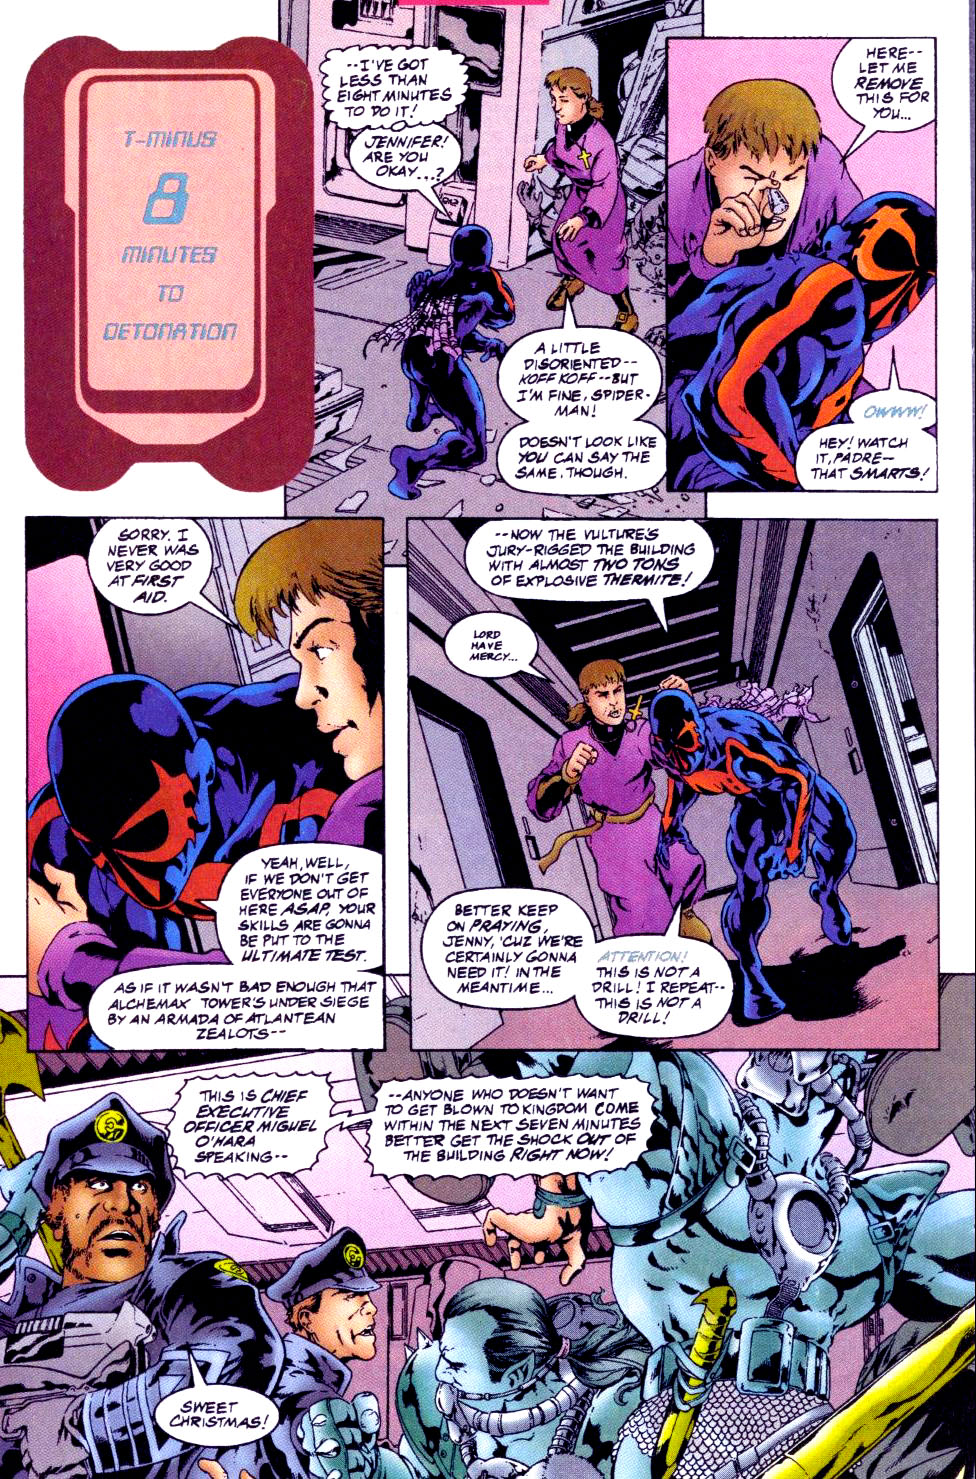 Spider-Man 2099 (1992) issue 46 - Page 16